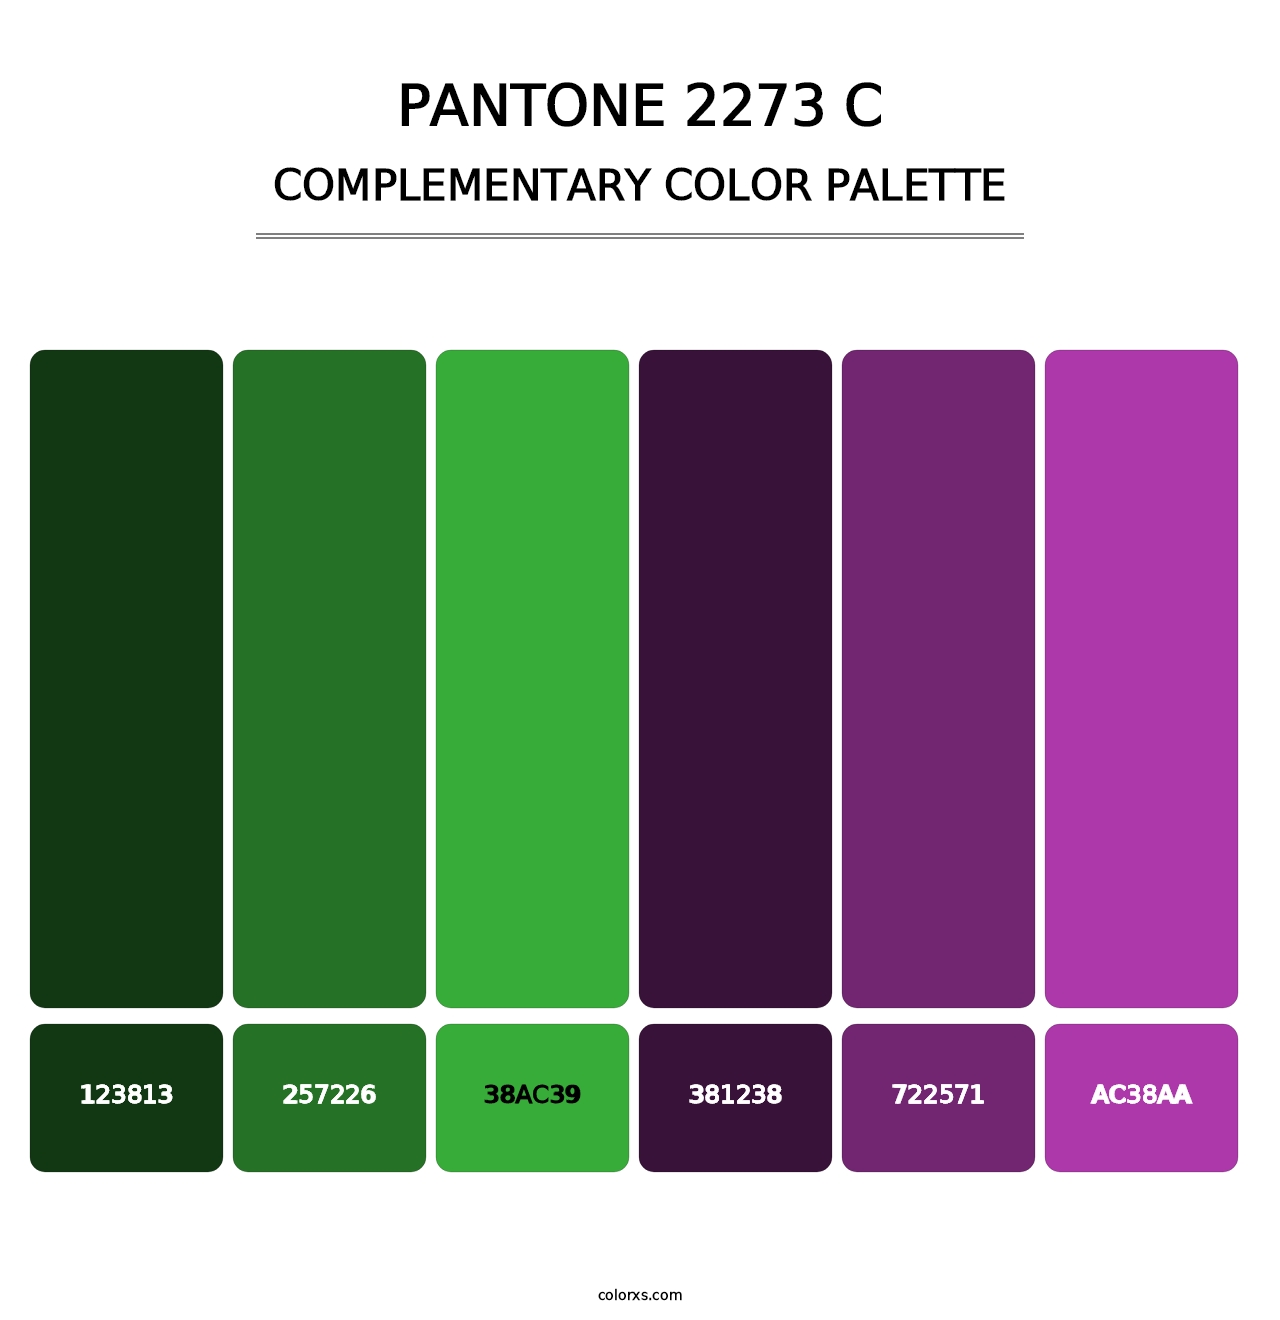 PANTONE 2273 C - Complementary Color Palette